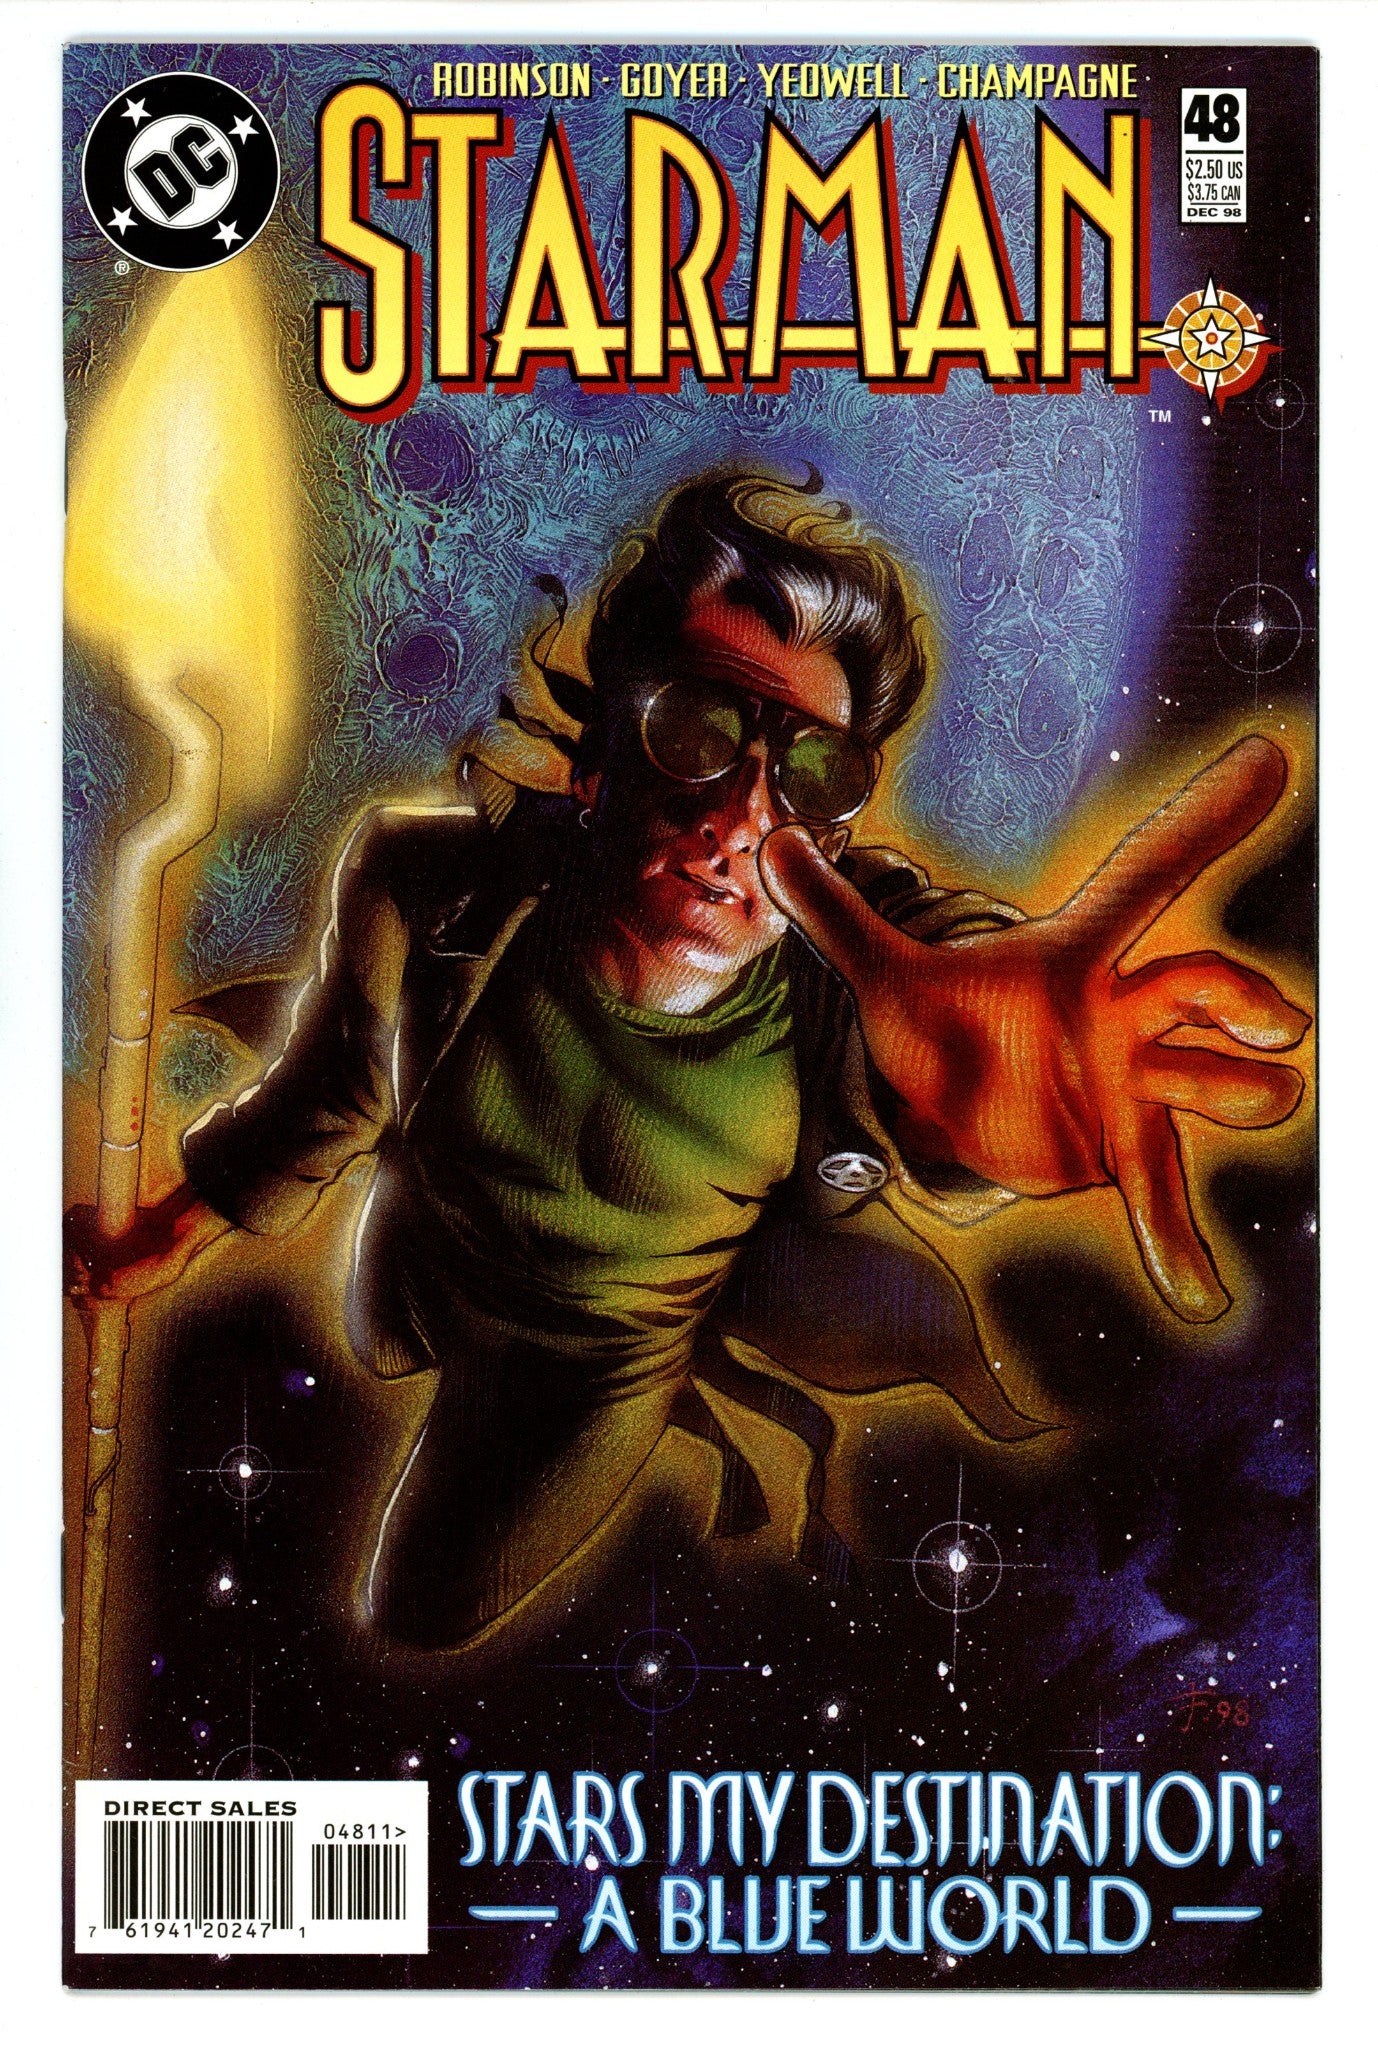 Starman Vol 2 48 High Grade (1998) 